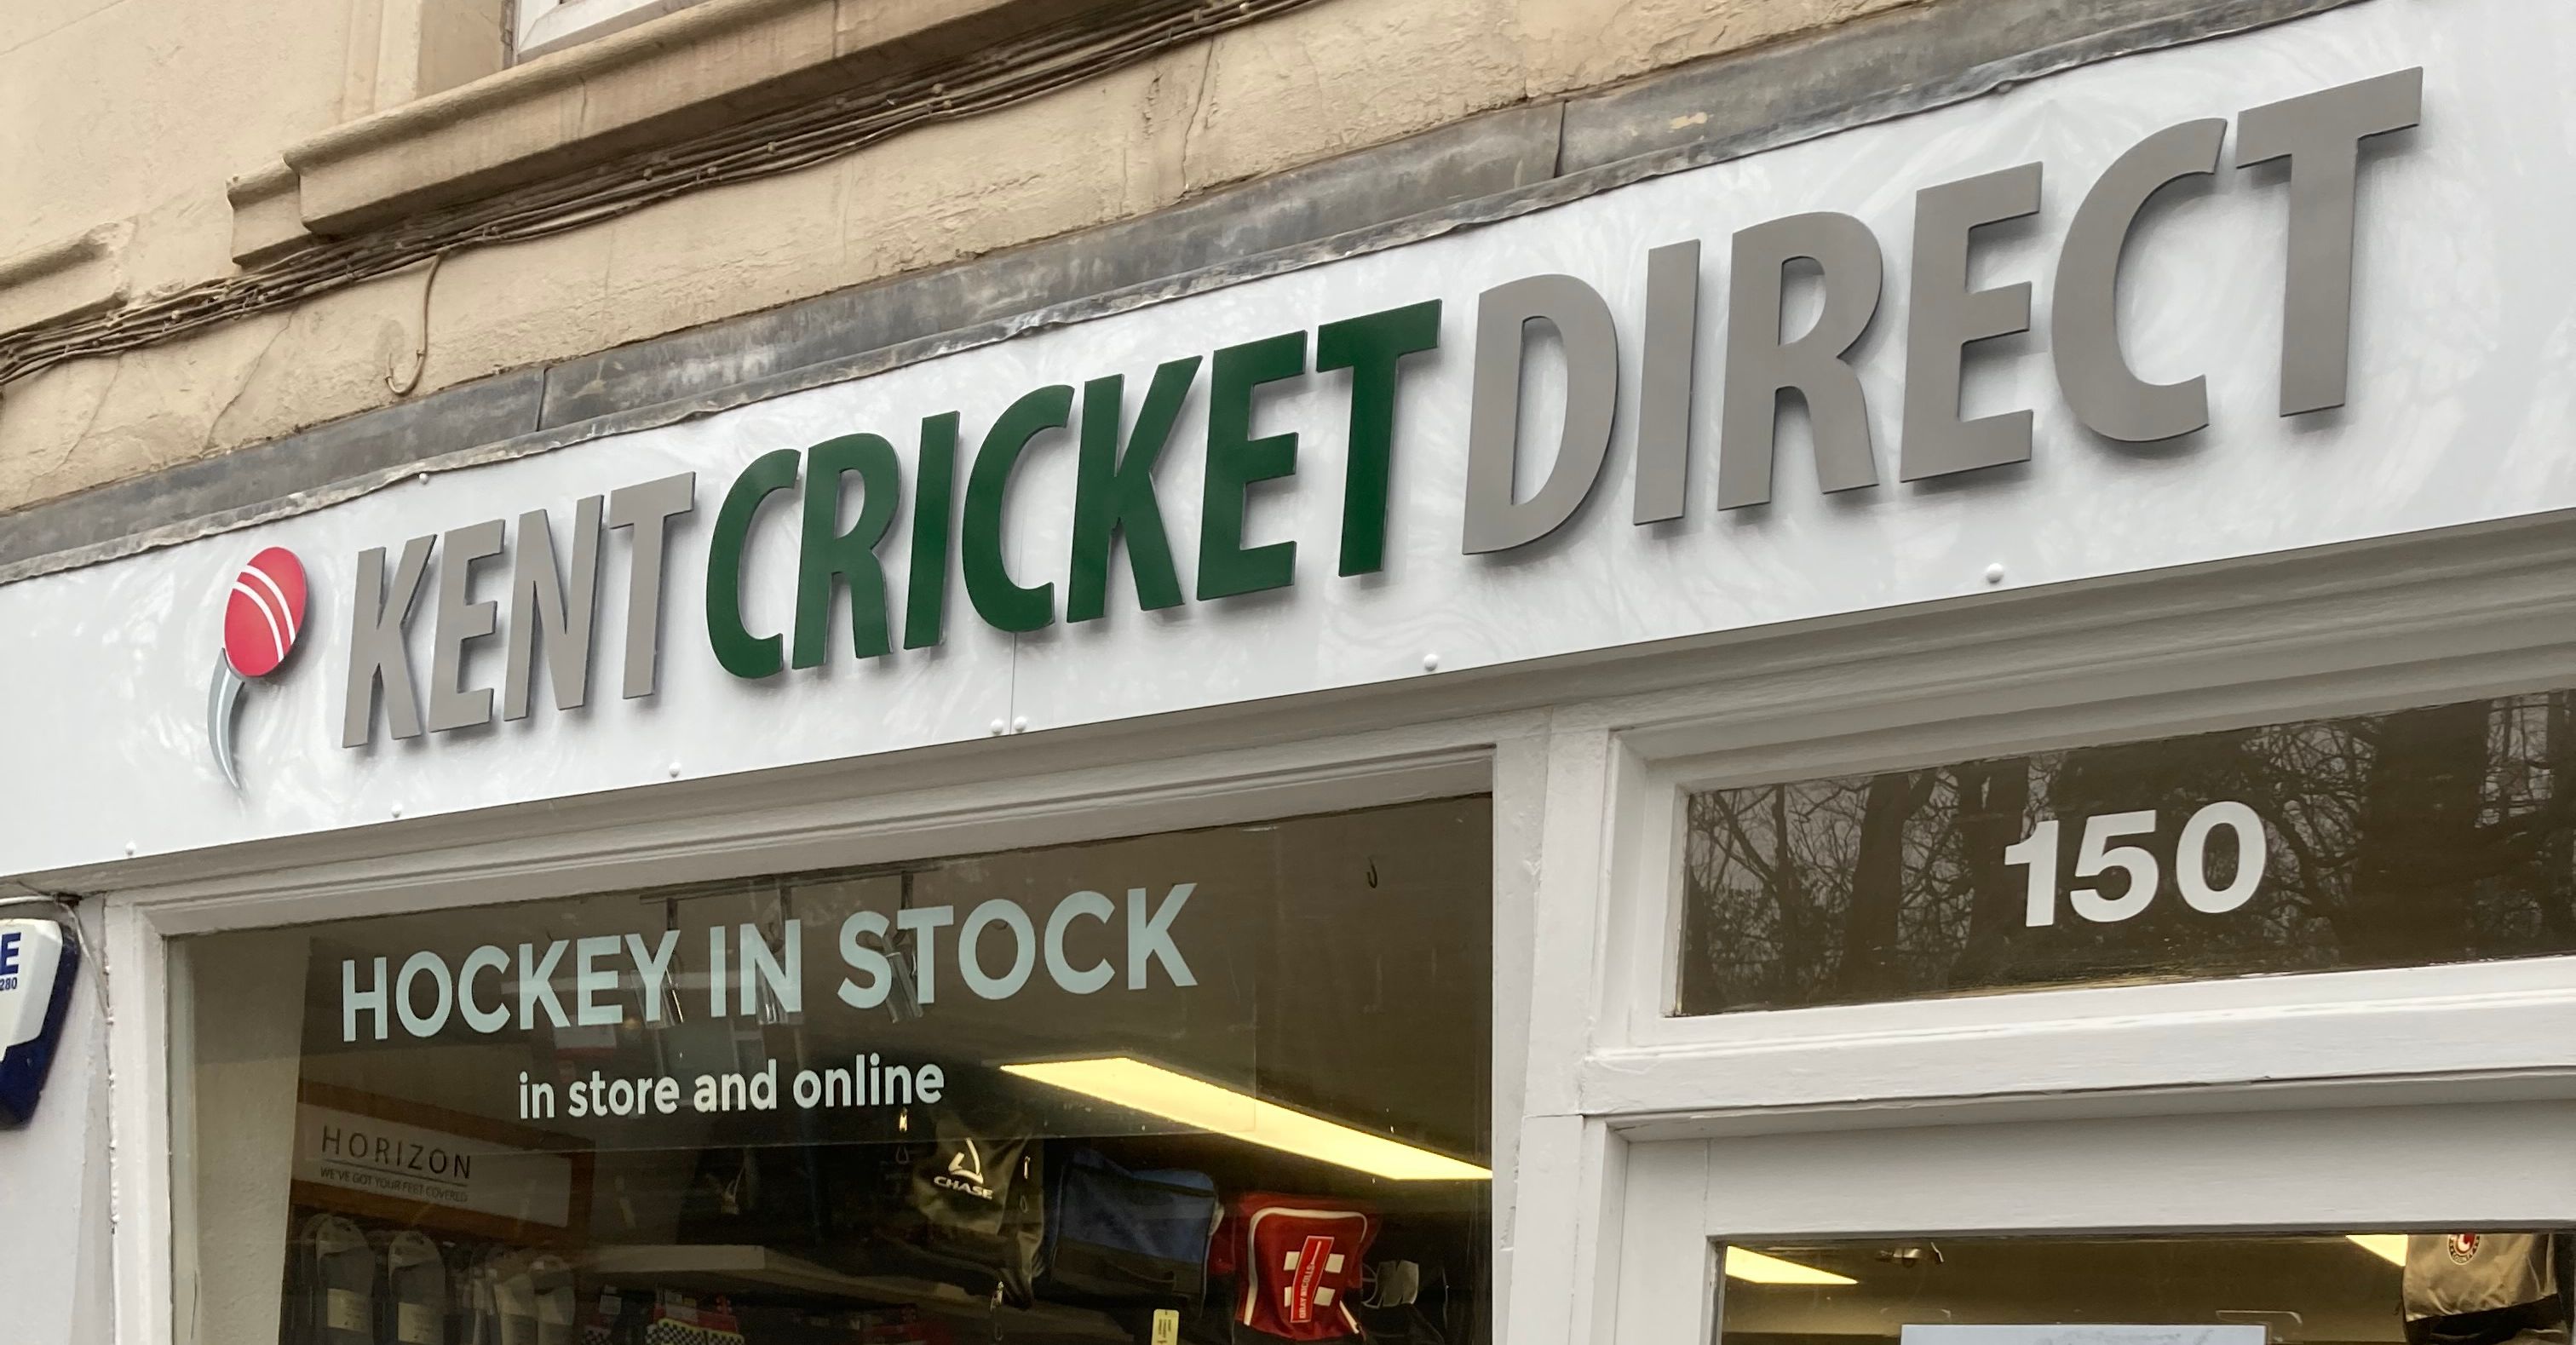 Kent Cricket Direct